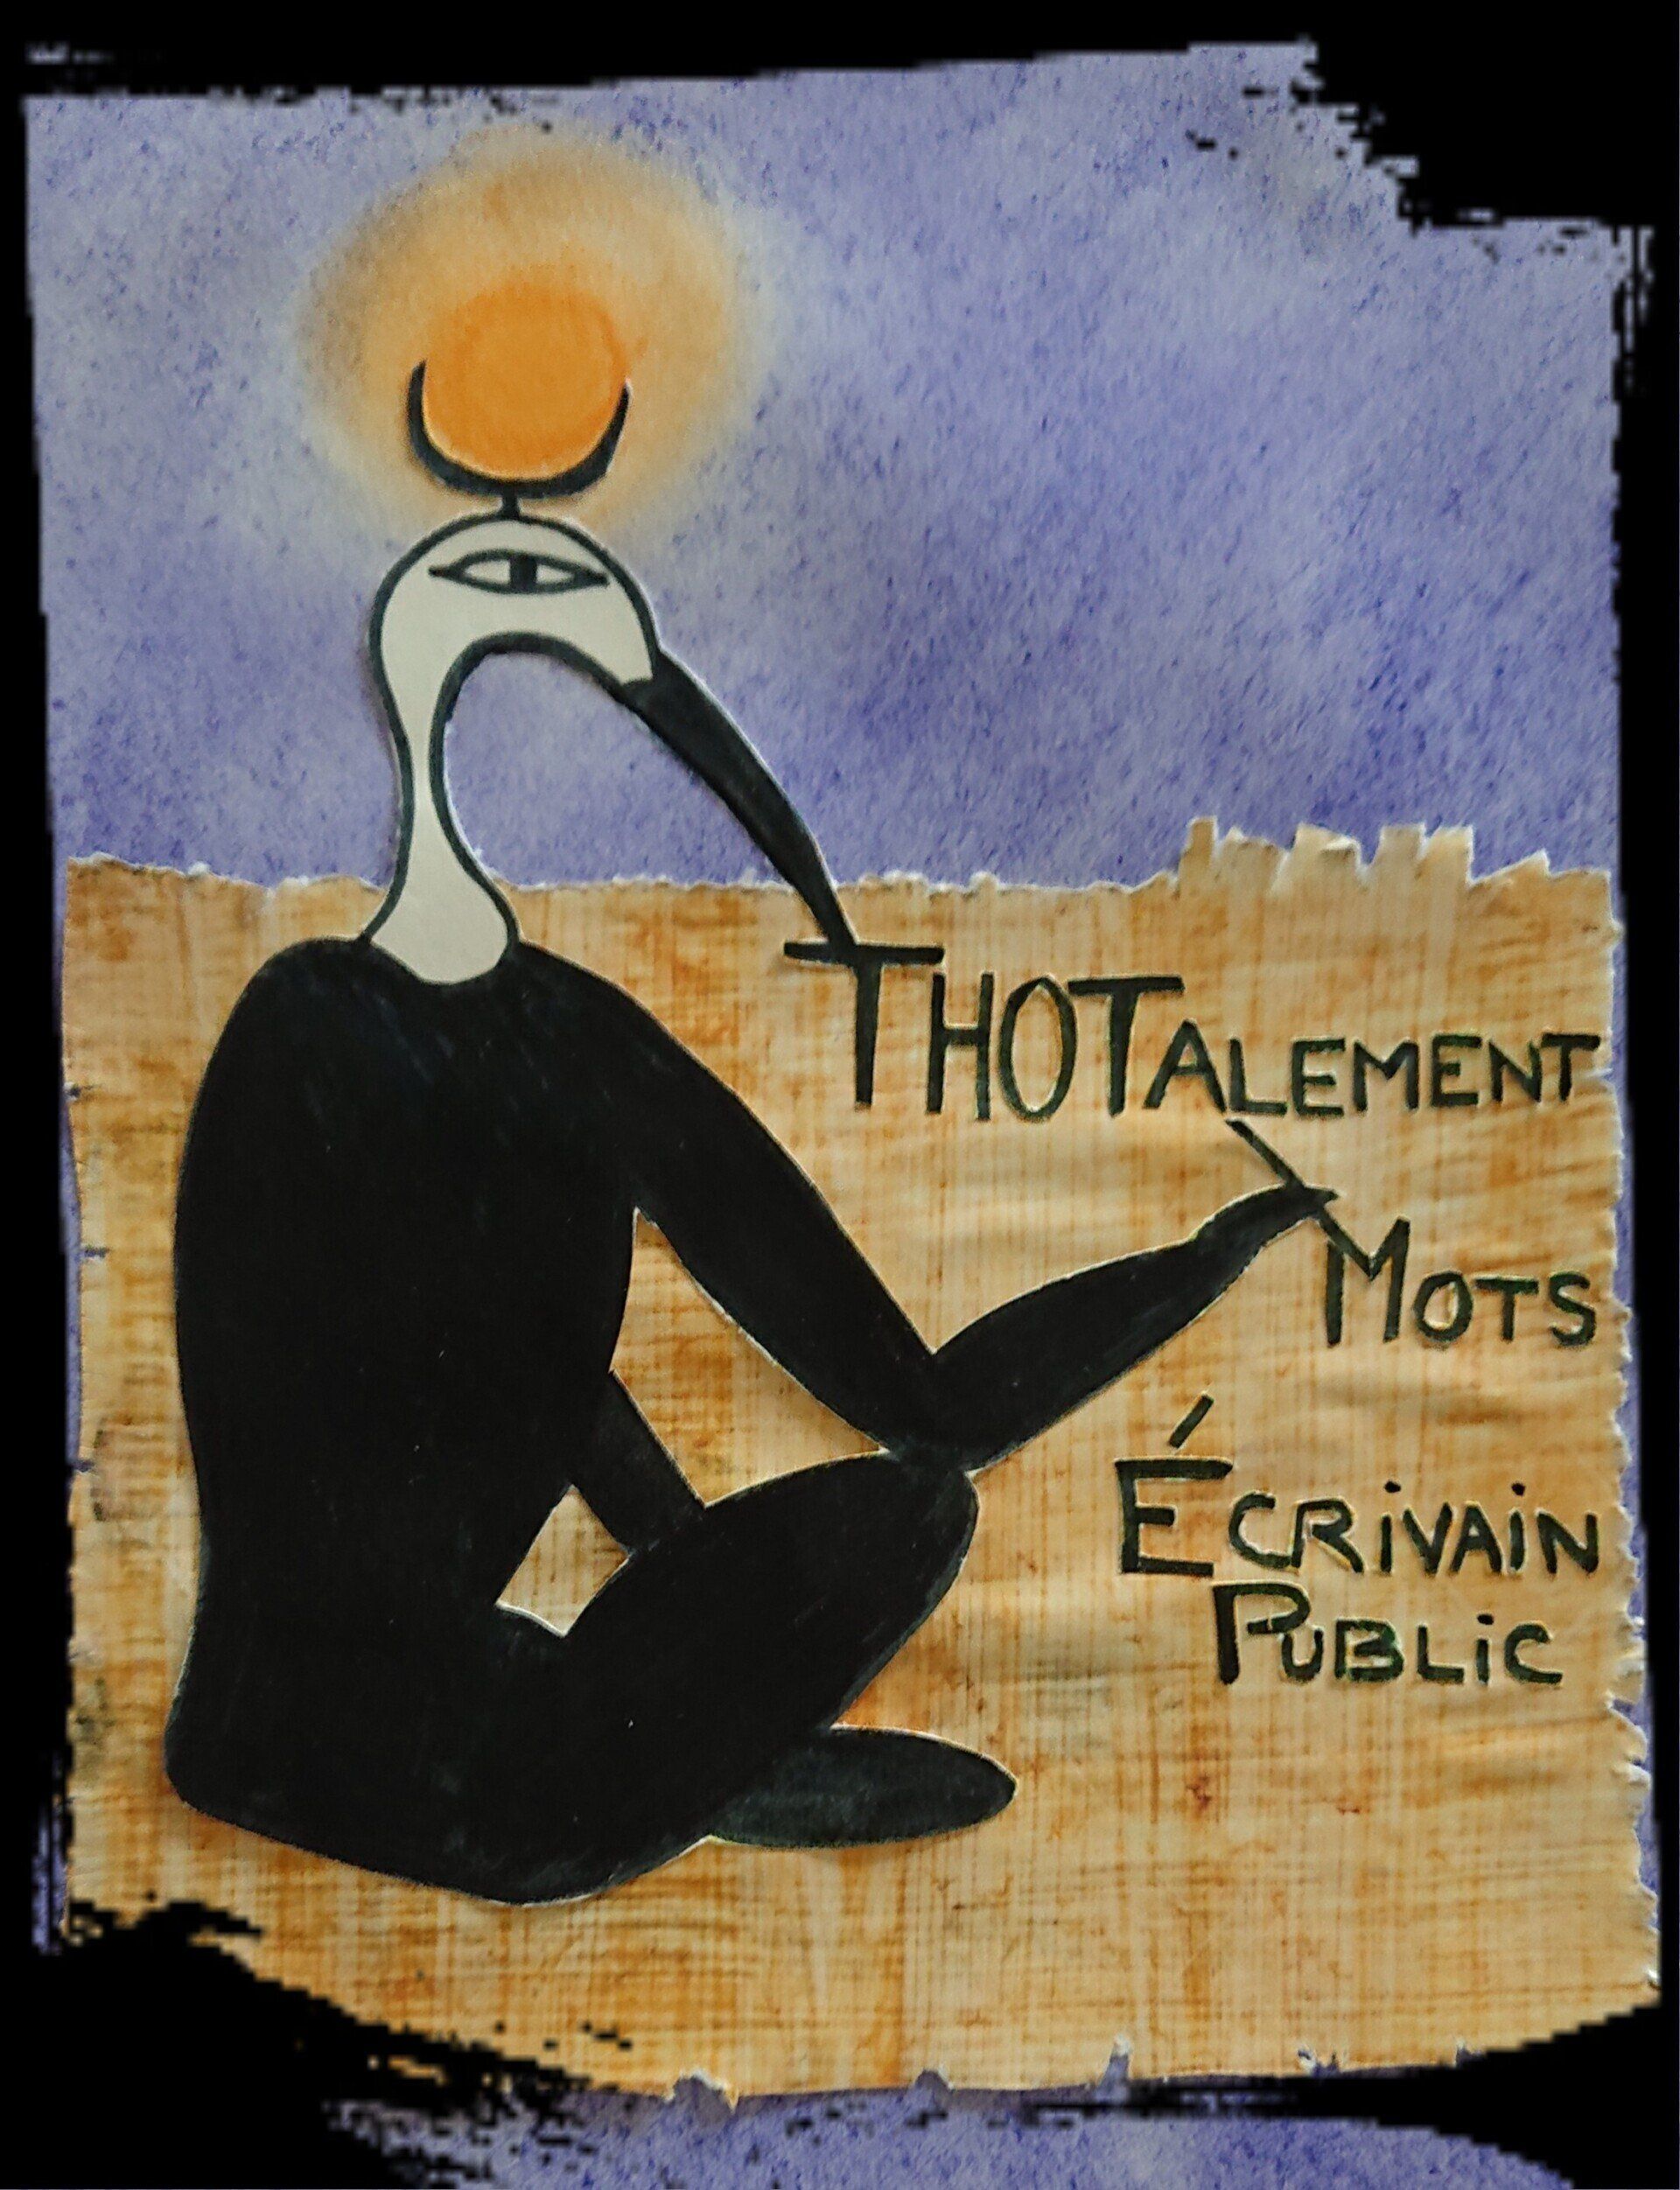 Thotalement Mots